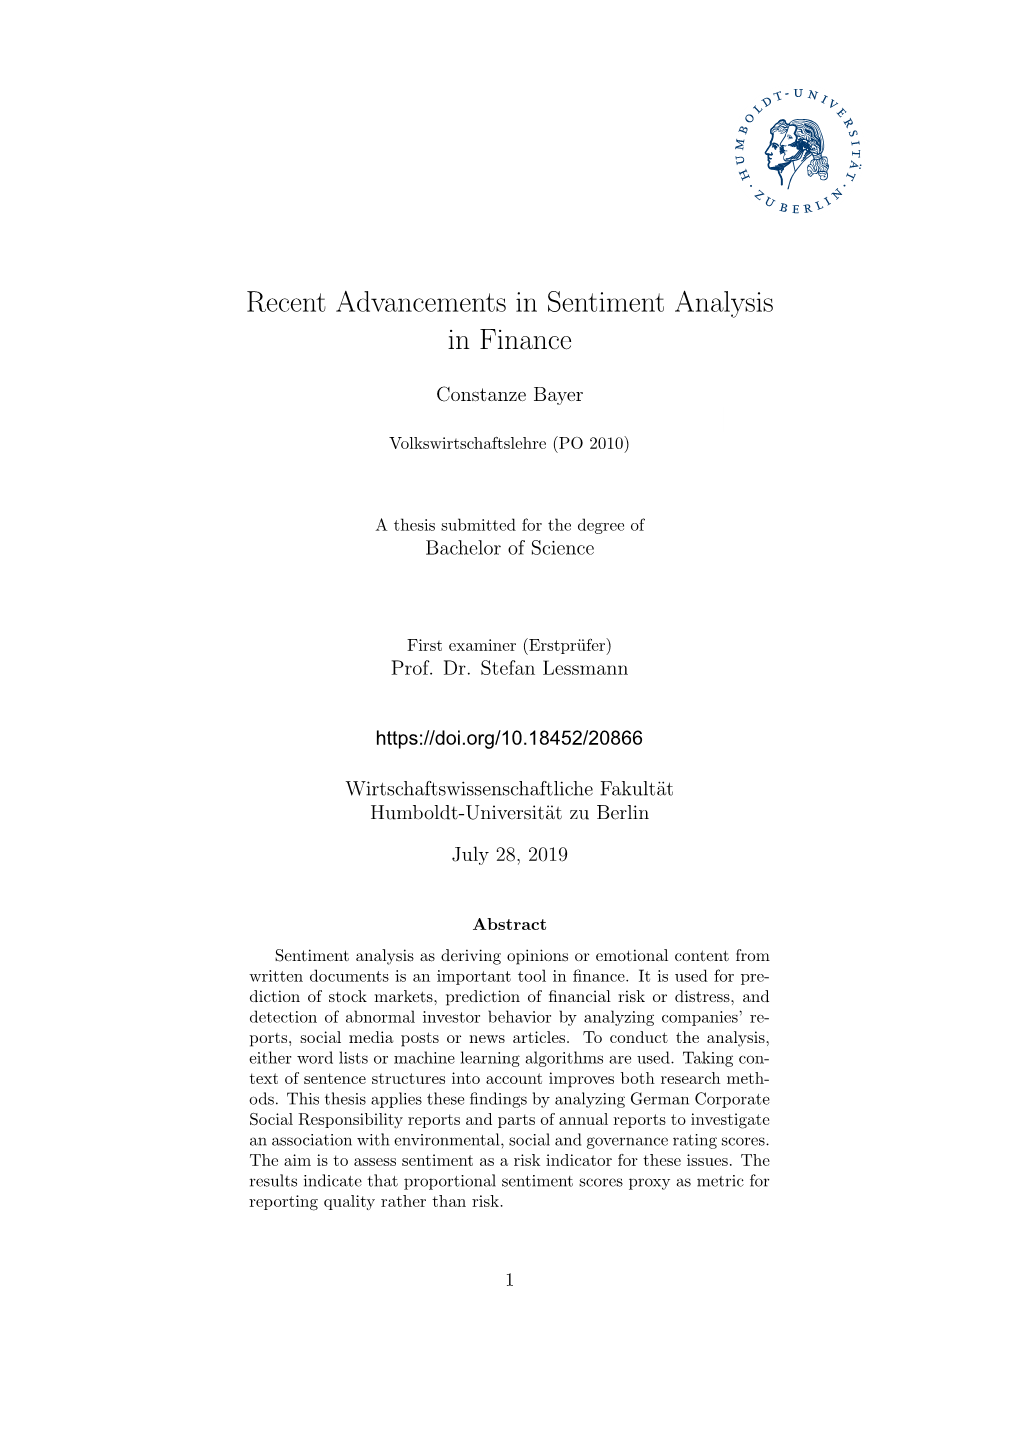 Recent Advancements in Sentiment Analysis in Finance